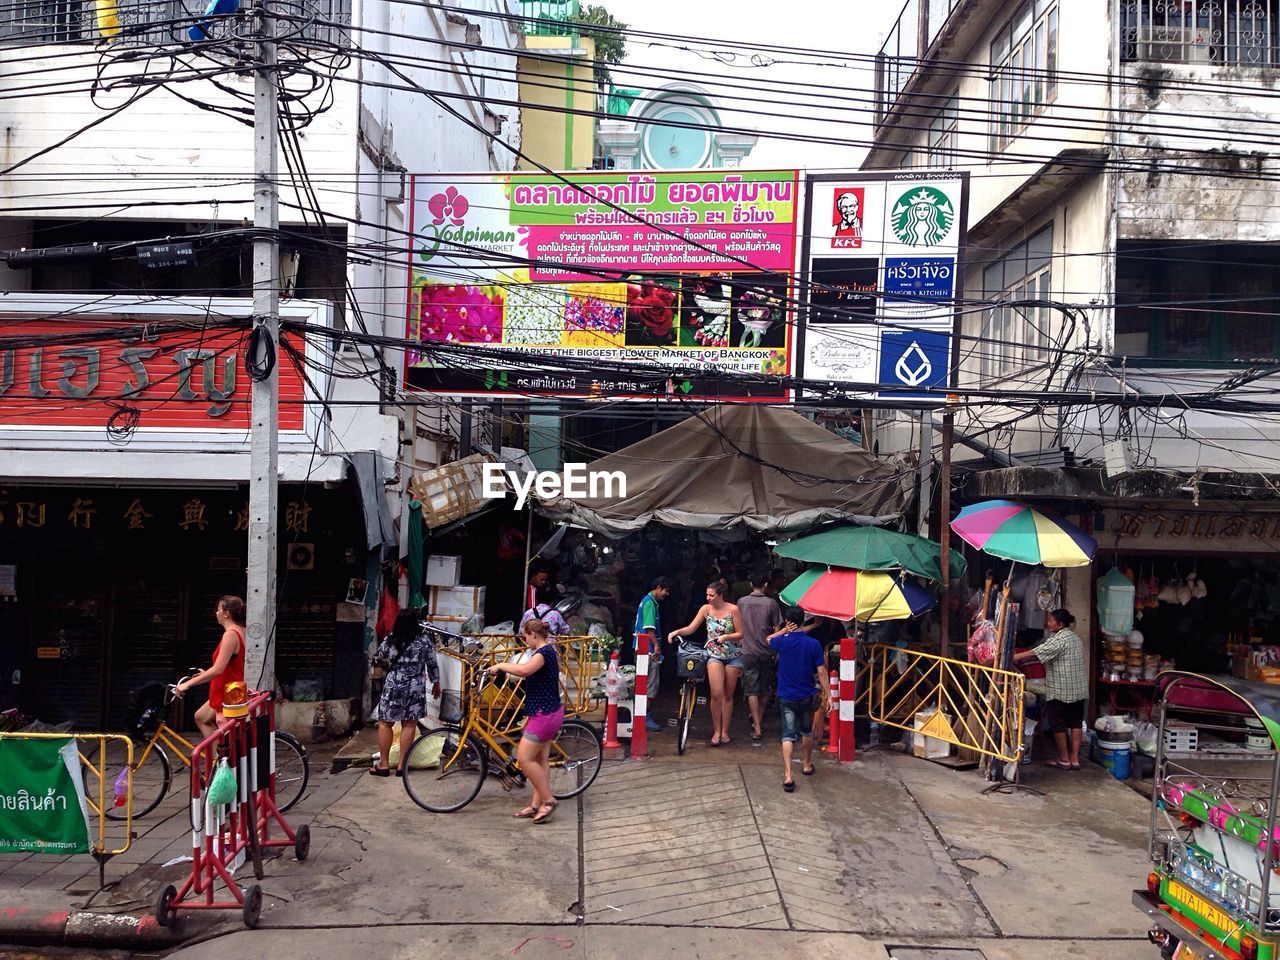 Chinatown in bangkok 